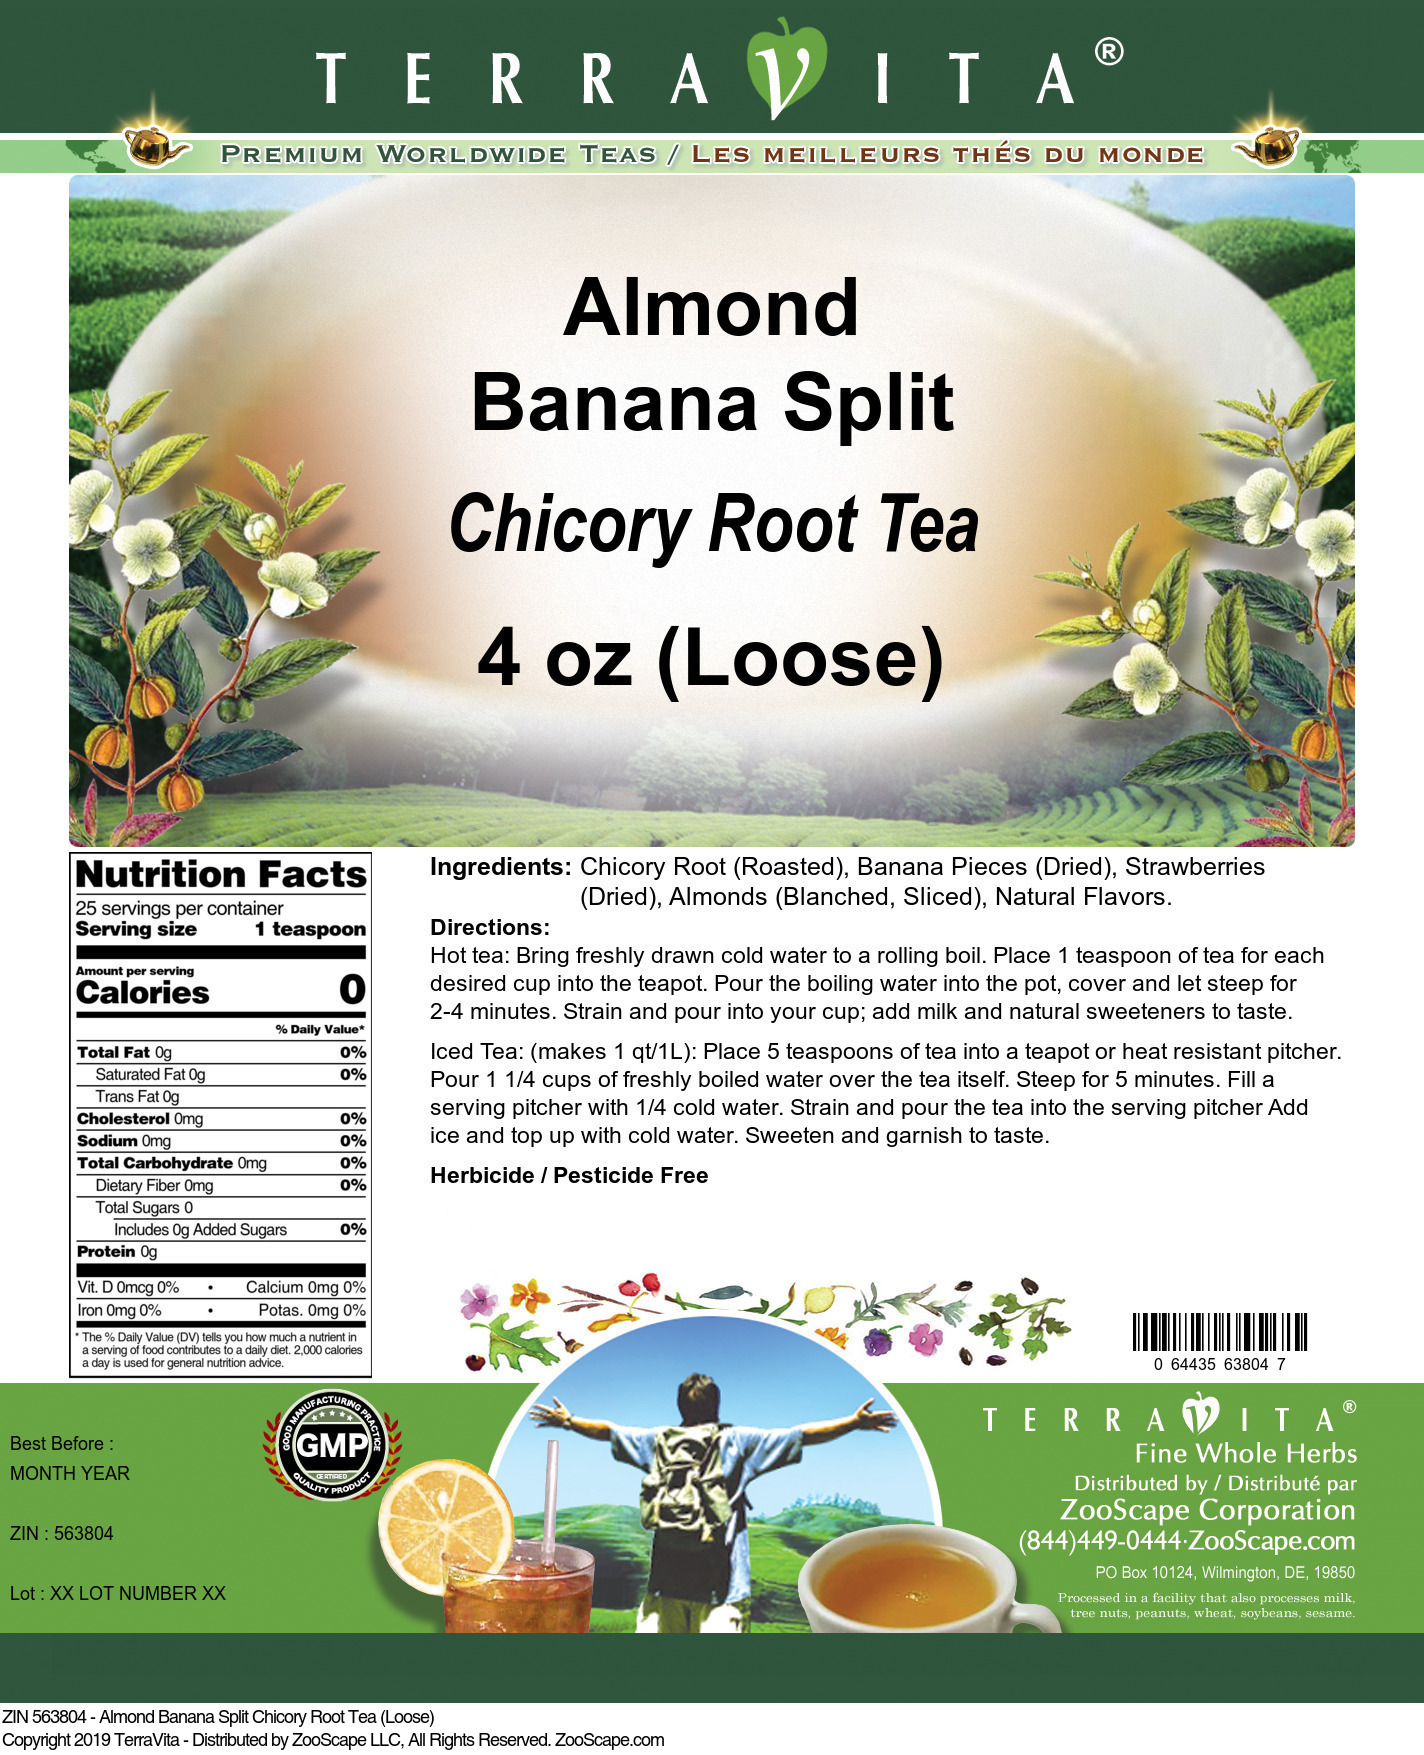 Almond Banana Split Chicory Root Tea (Loose) - Label